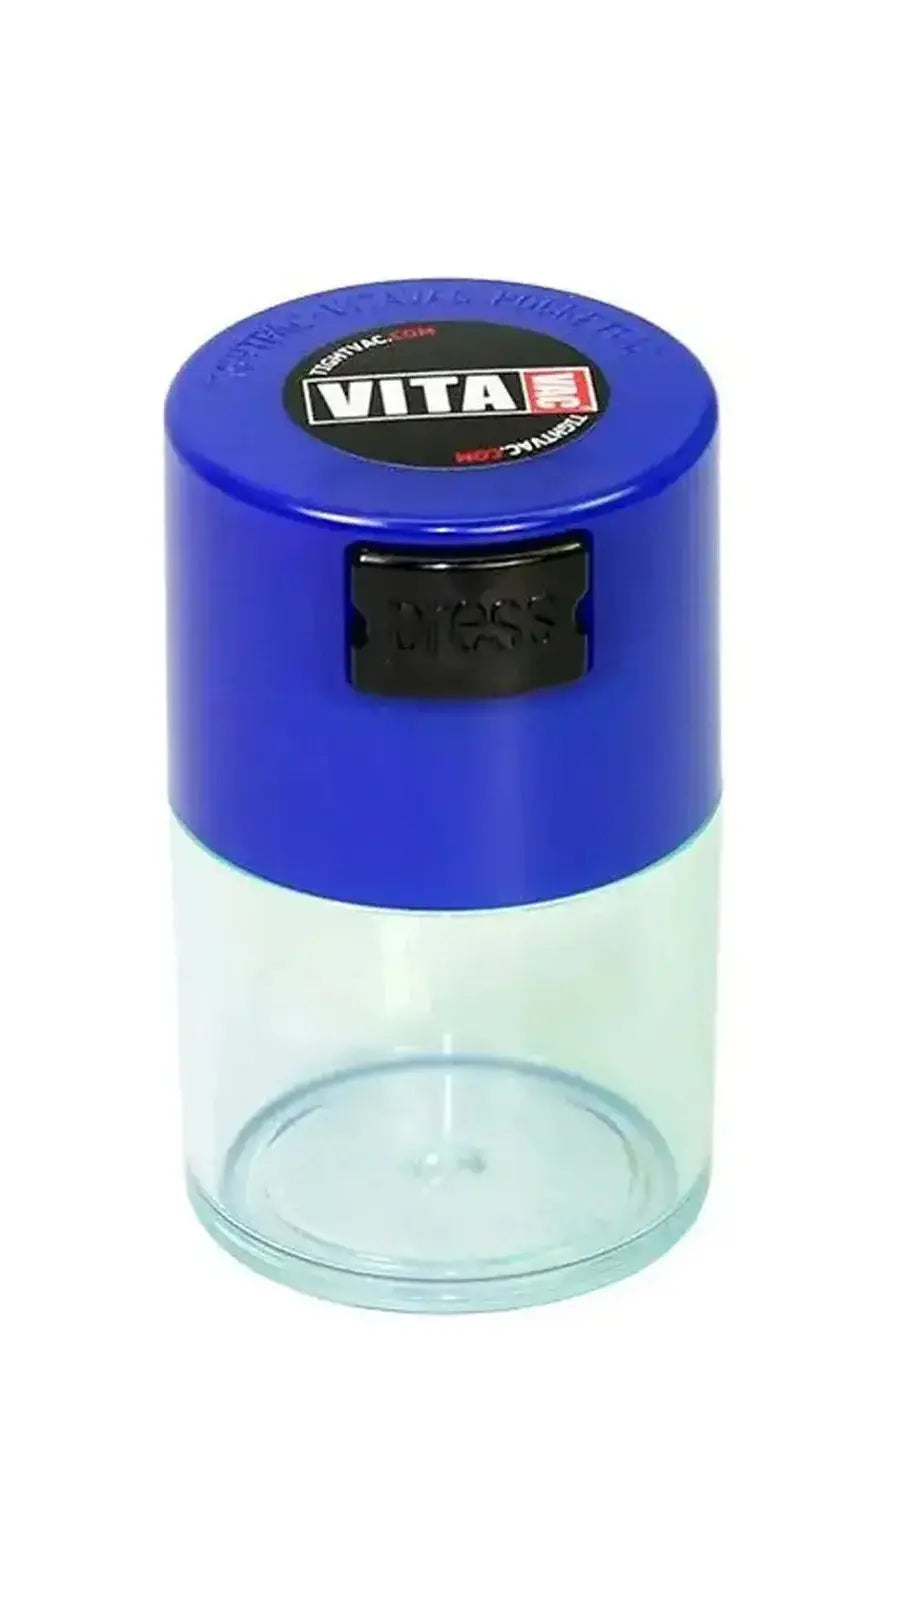 Vitavac 0,06 liter Pocket / 20g / Clear / Dark Blue TightVac Europe